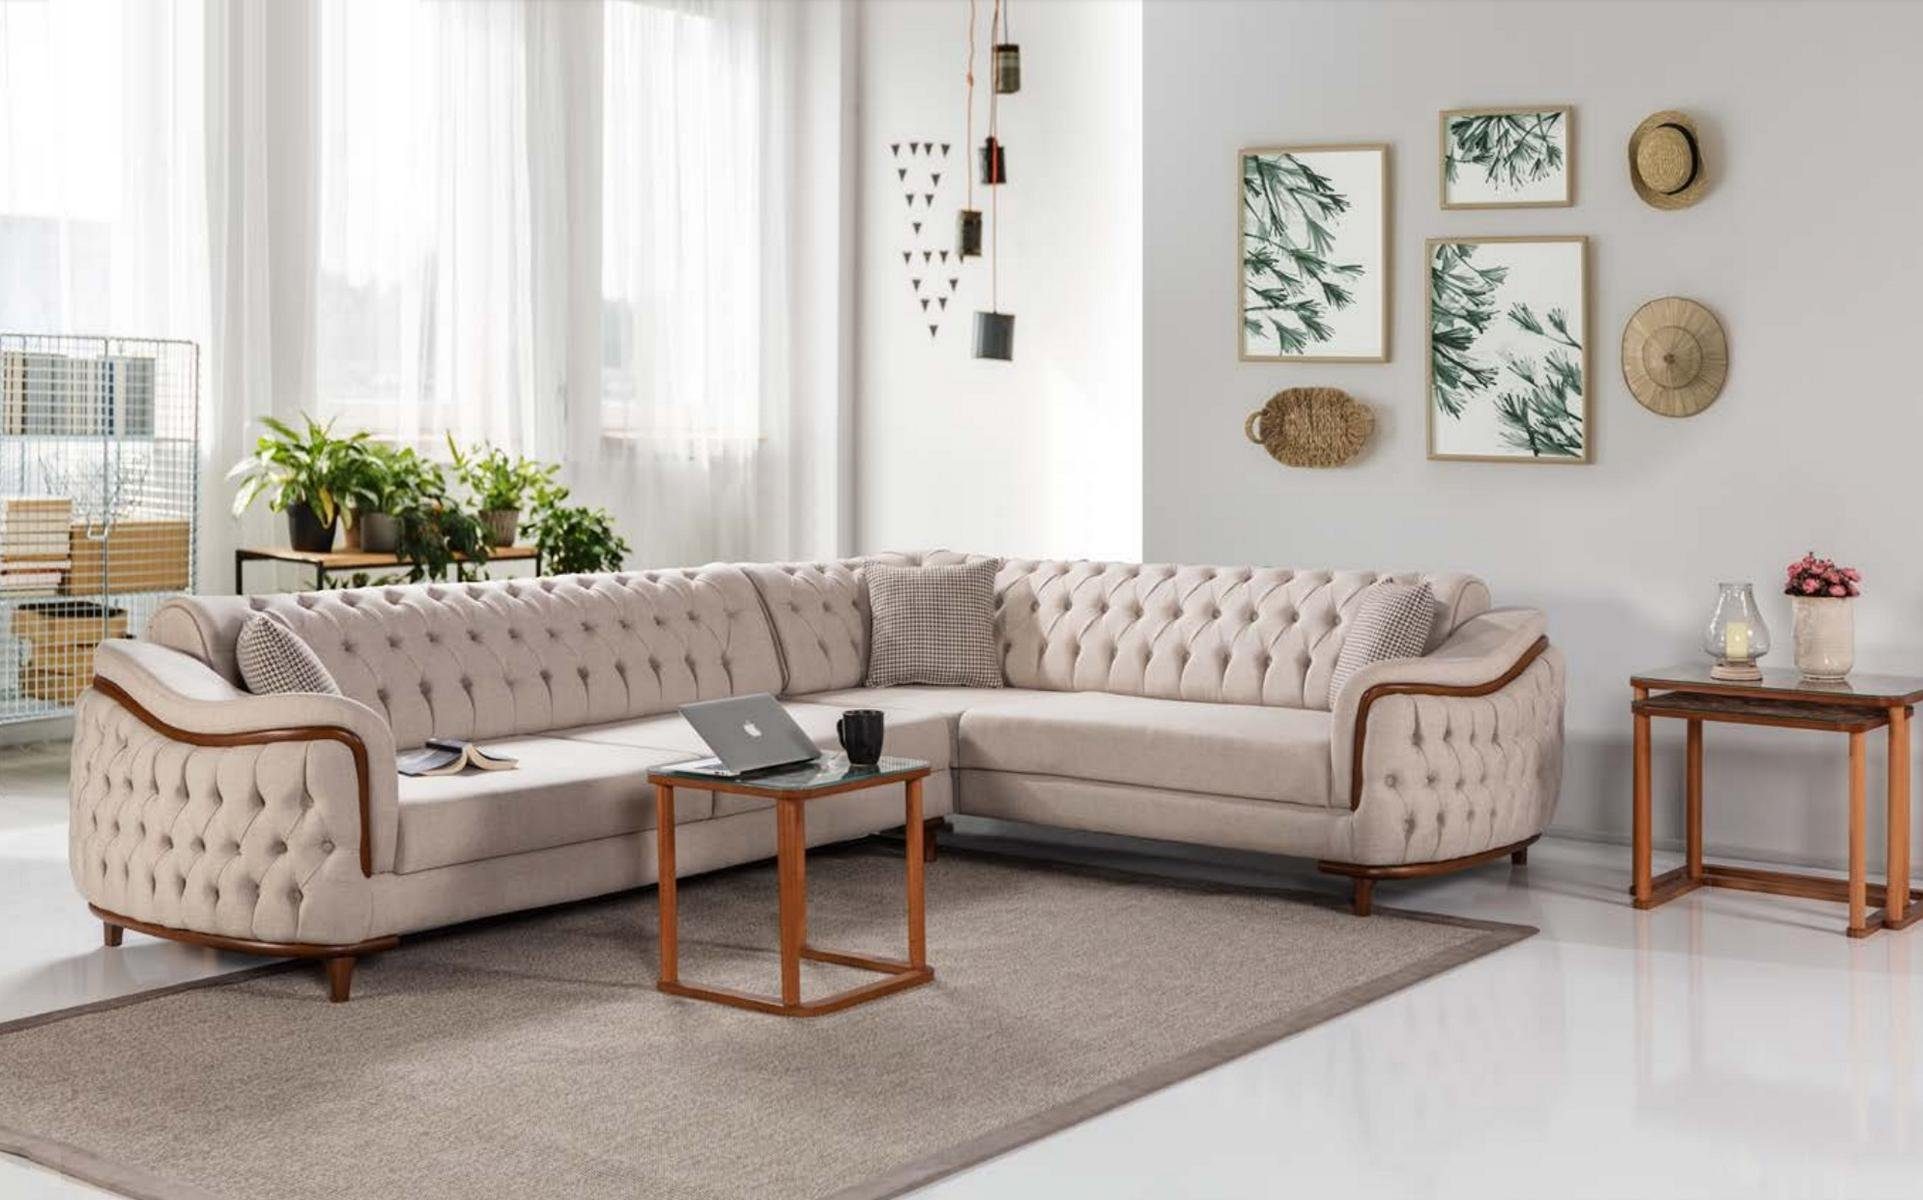 JVmoebel Ecksofa Beige Chesterfield Couch mit Holz Elementen Luxus Ecksofa Eckcouch, Made in Europe